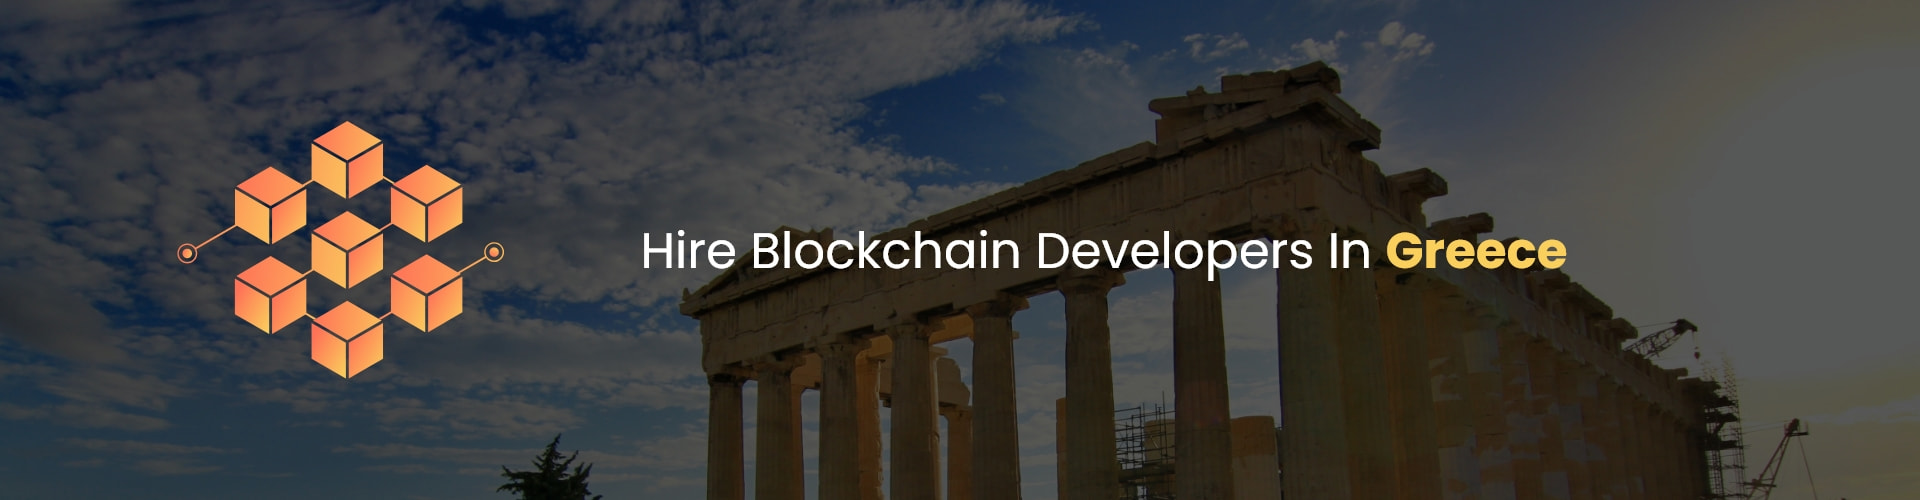 hire blockchain developers in greece